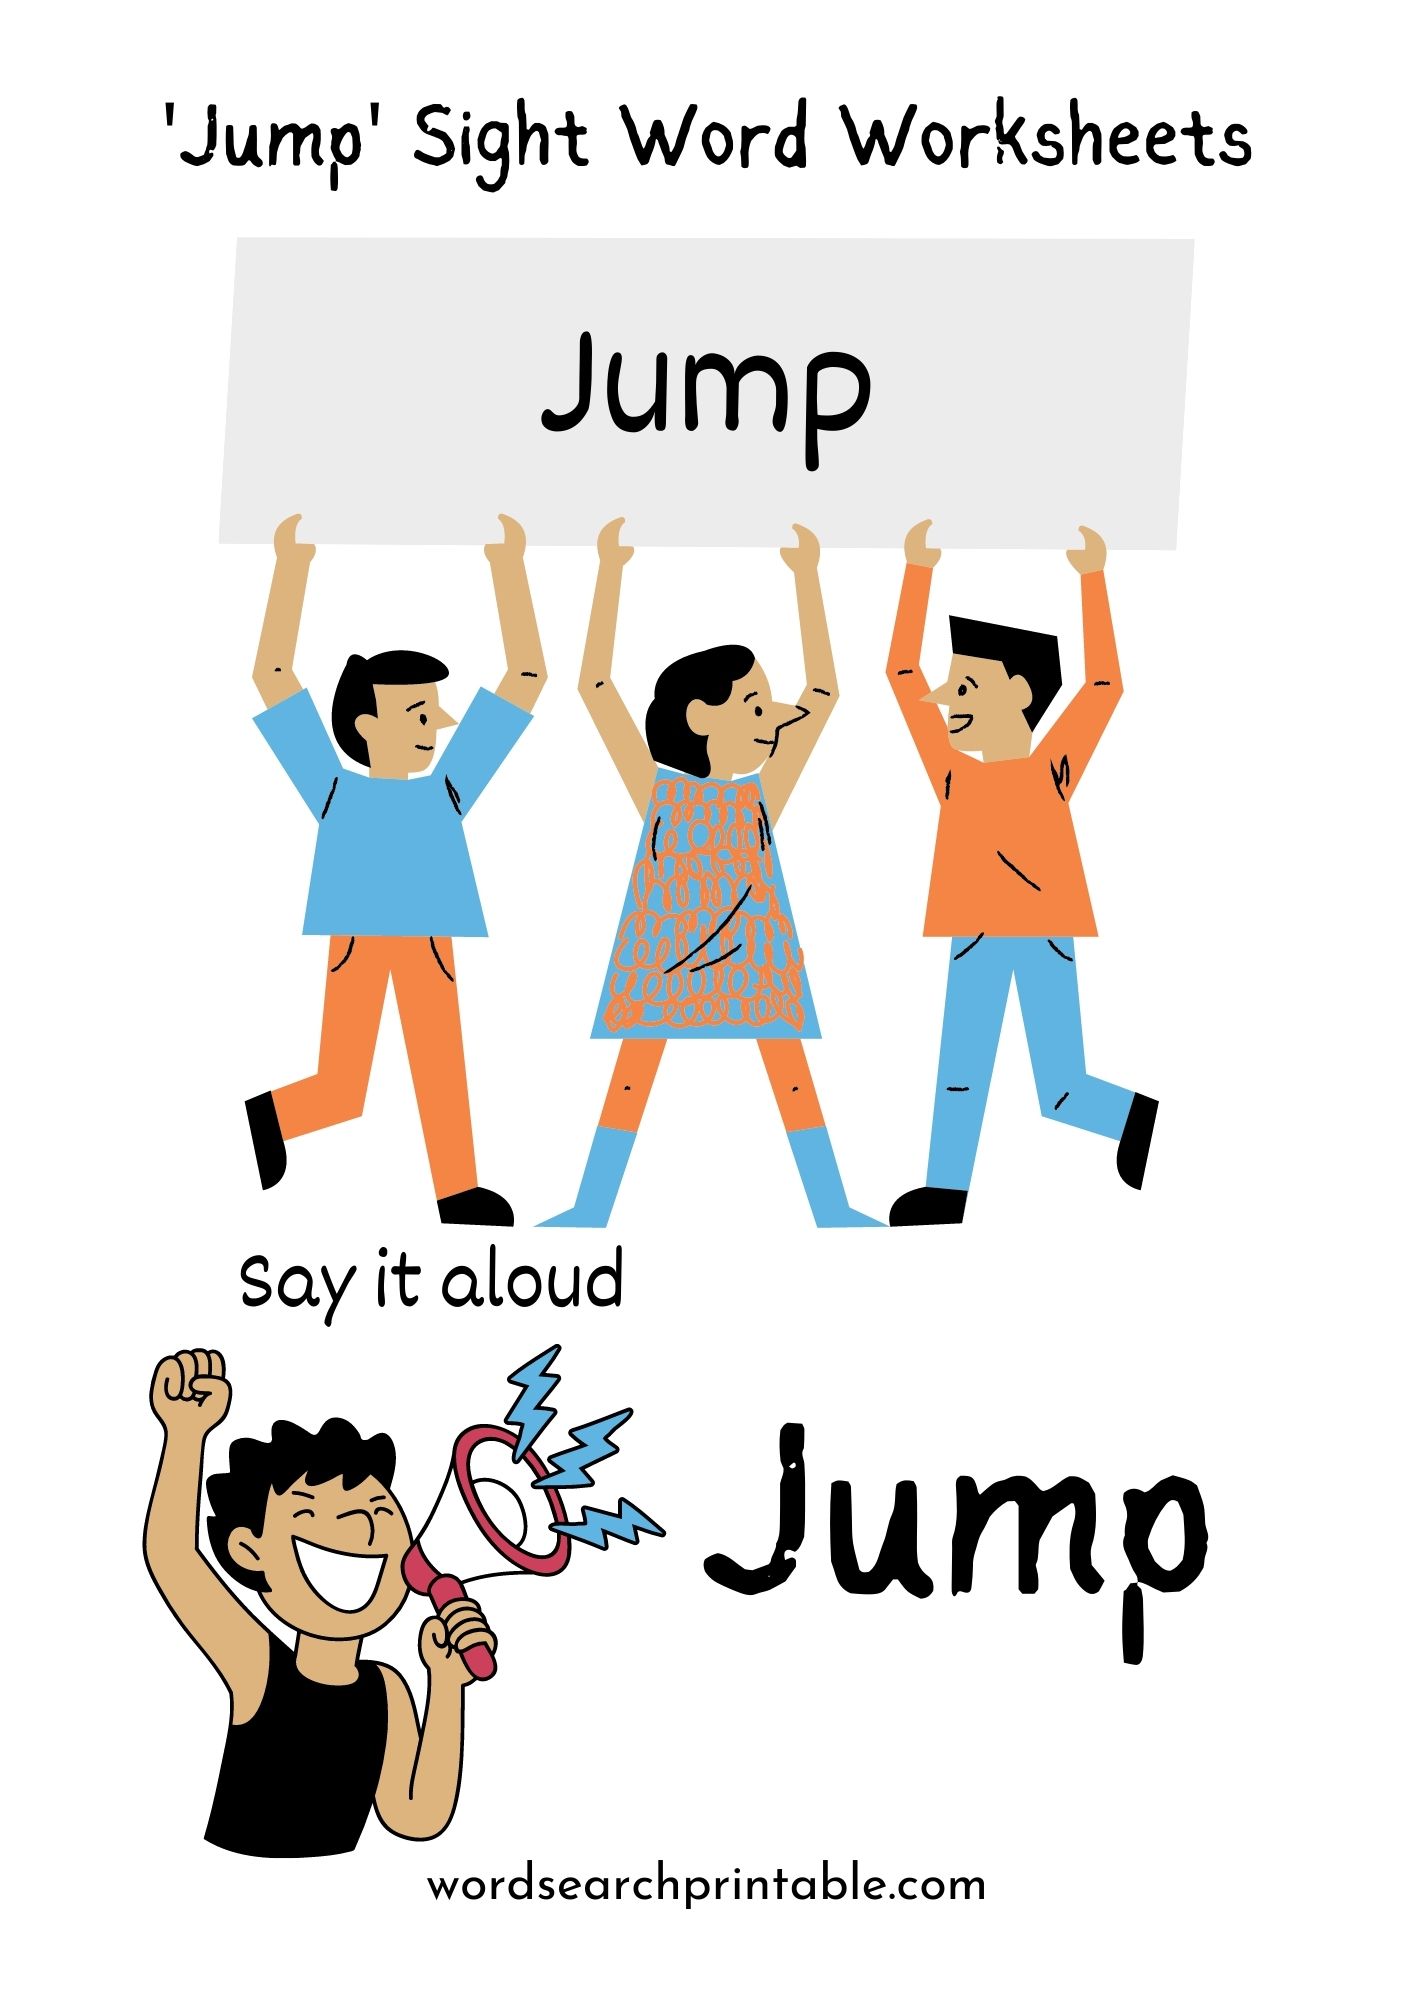 Jumo Sight Word Worksheet Free – Sight Word Jump Worksheet PDF Download